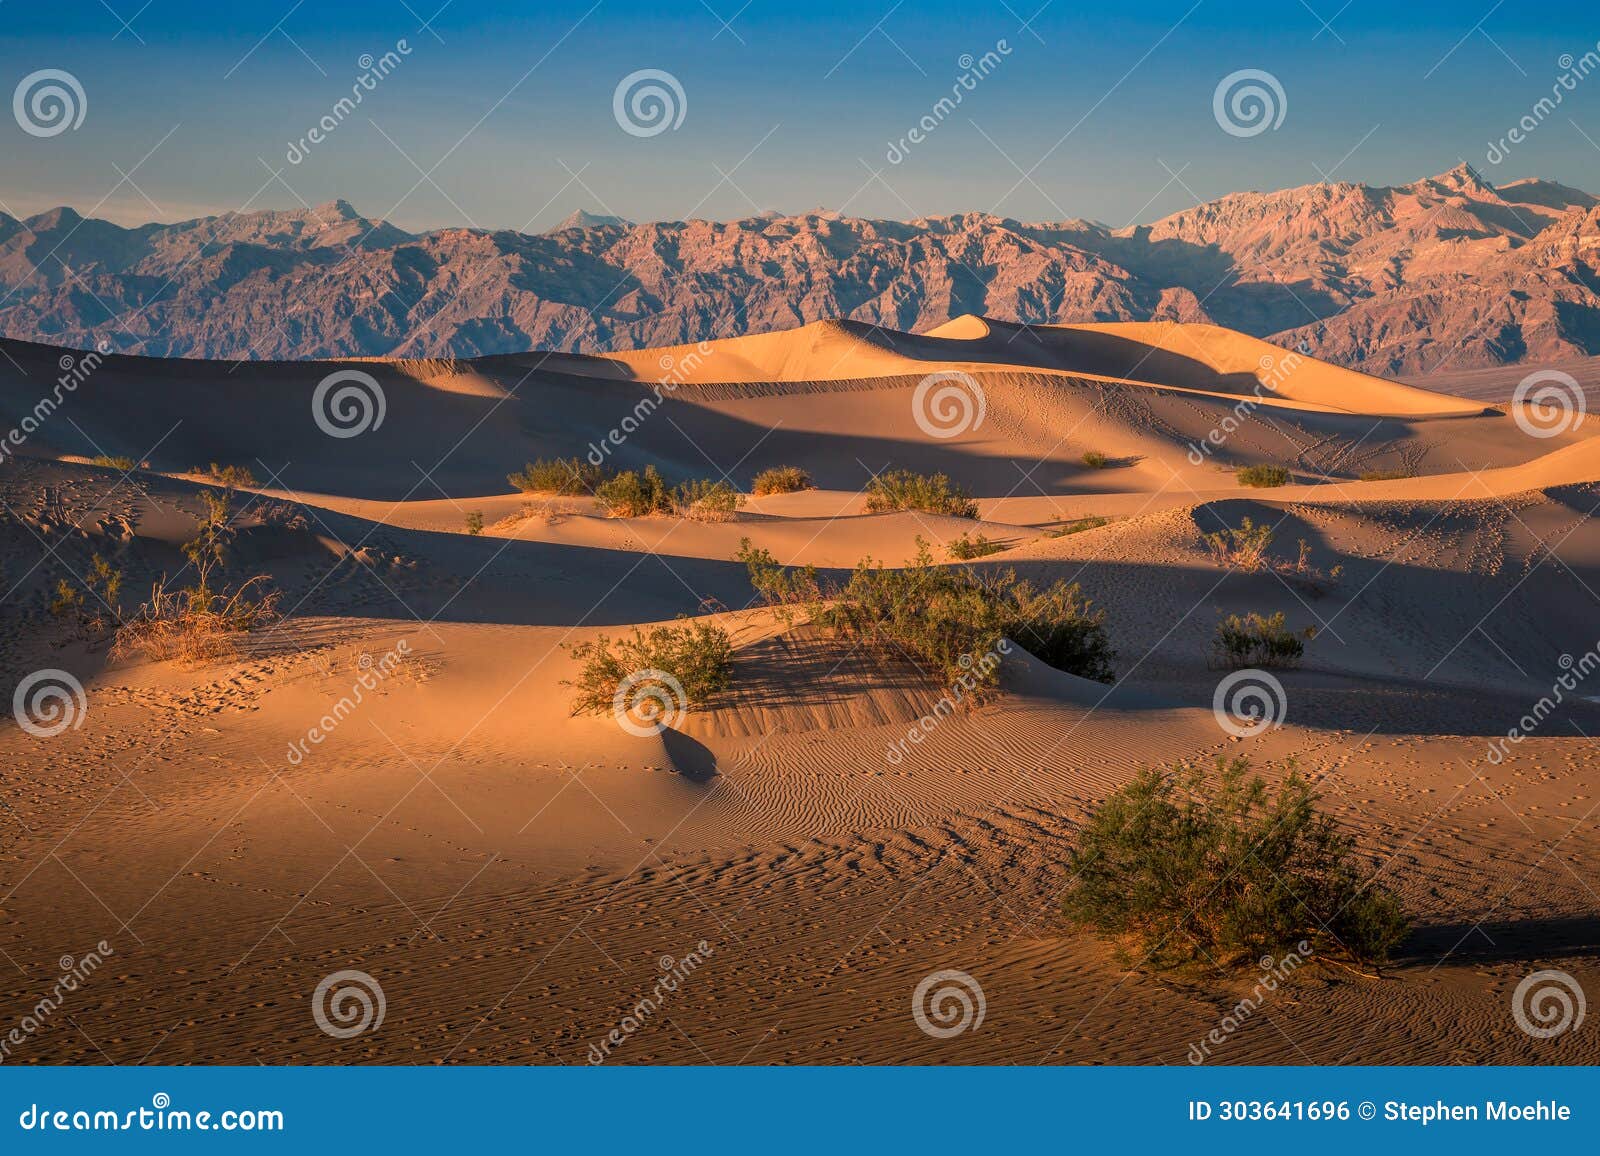 Stunning Sunset on the Dunes, Mesquite Flat Sand Dunes, Death Valley ...